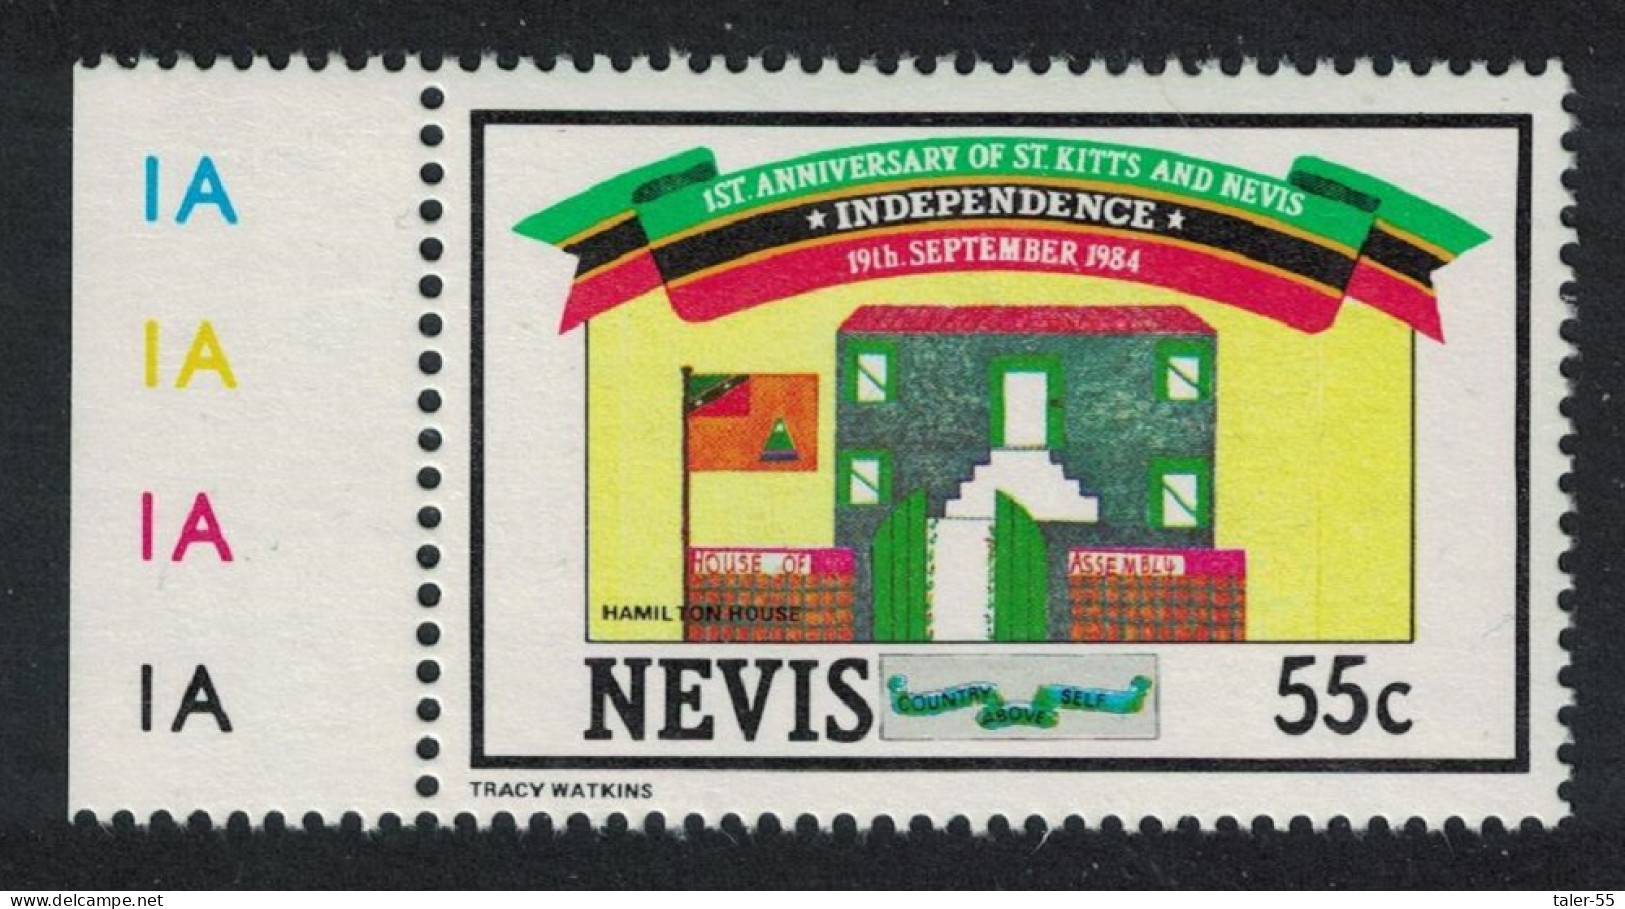 Nevis Alexander Hamilton's Birthplace 1984 MNH SG#200 - St.Kitts And Nevis ( 1983-...)